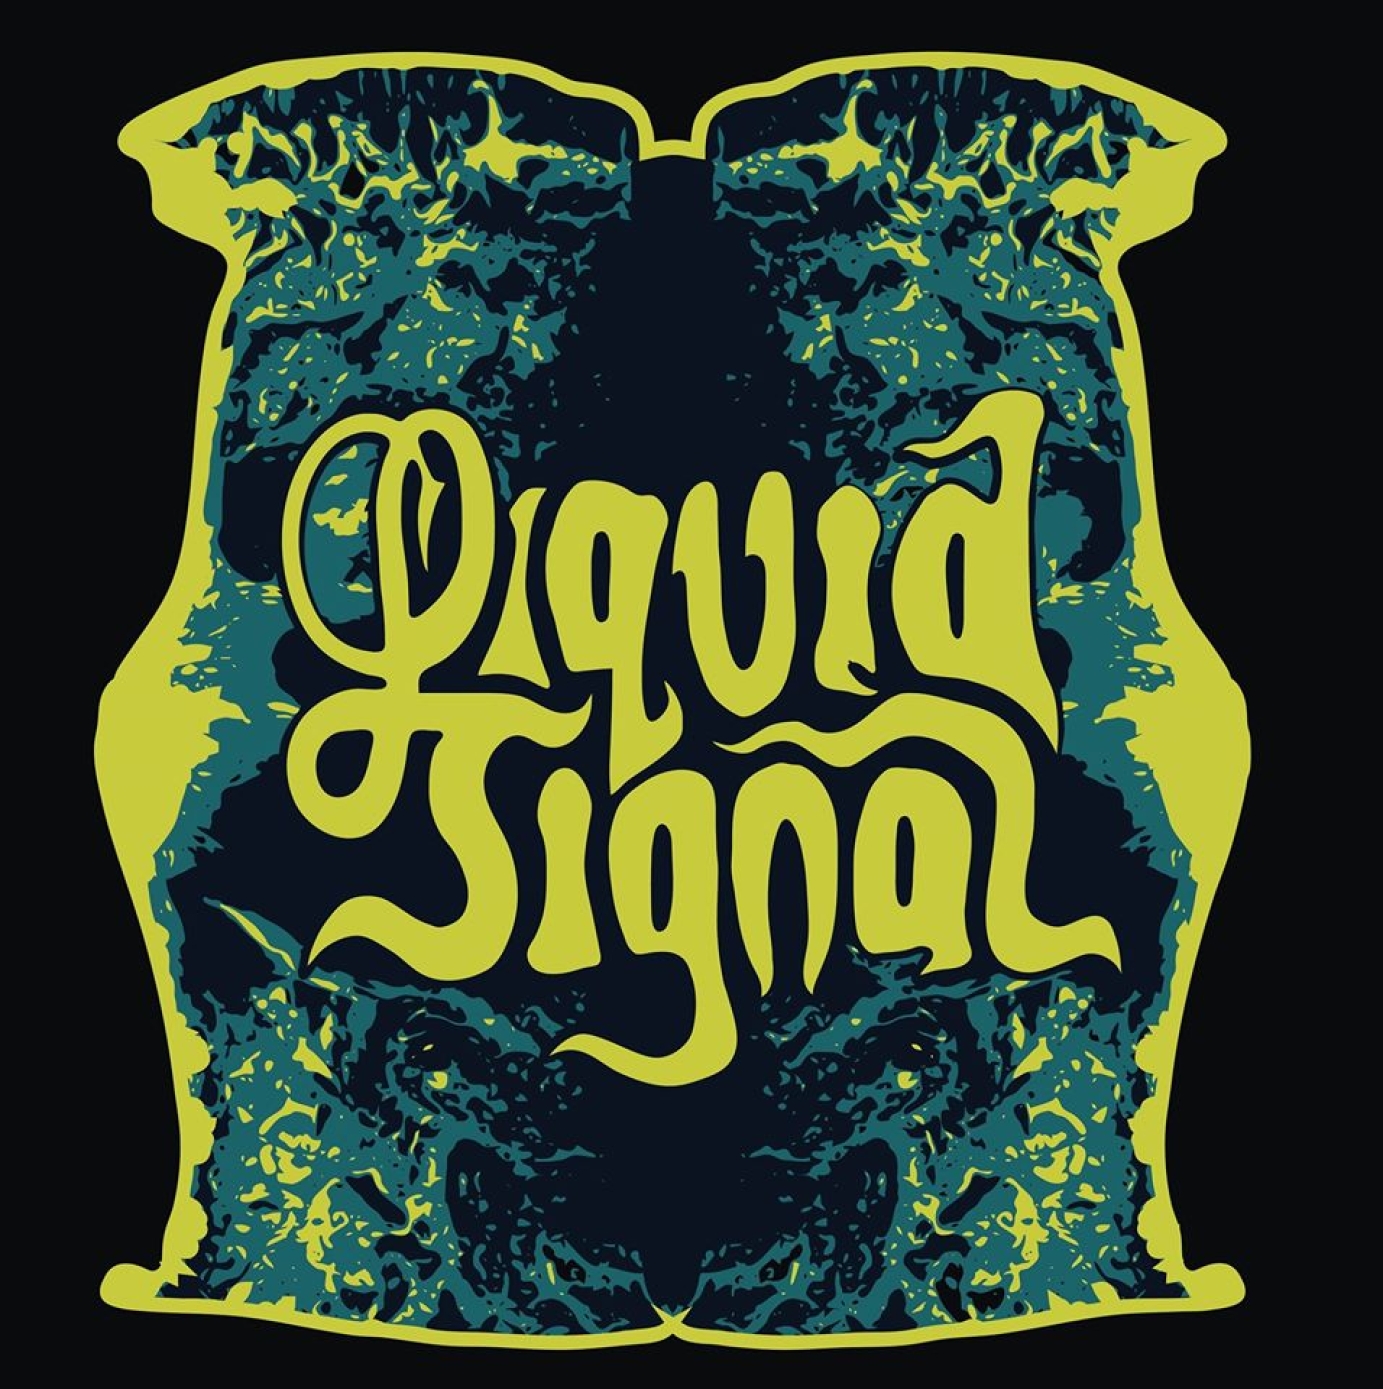 Liquid Signal Album Art, Merchandise, and Flier